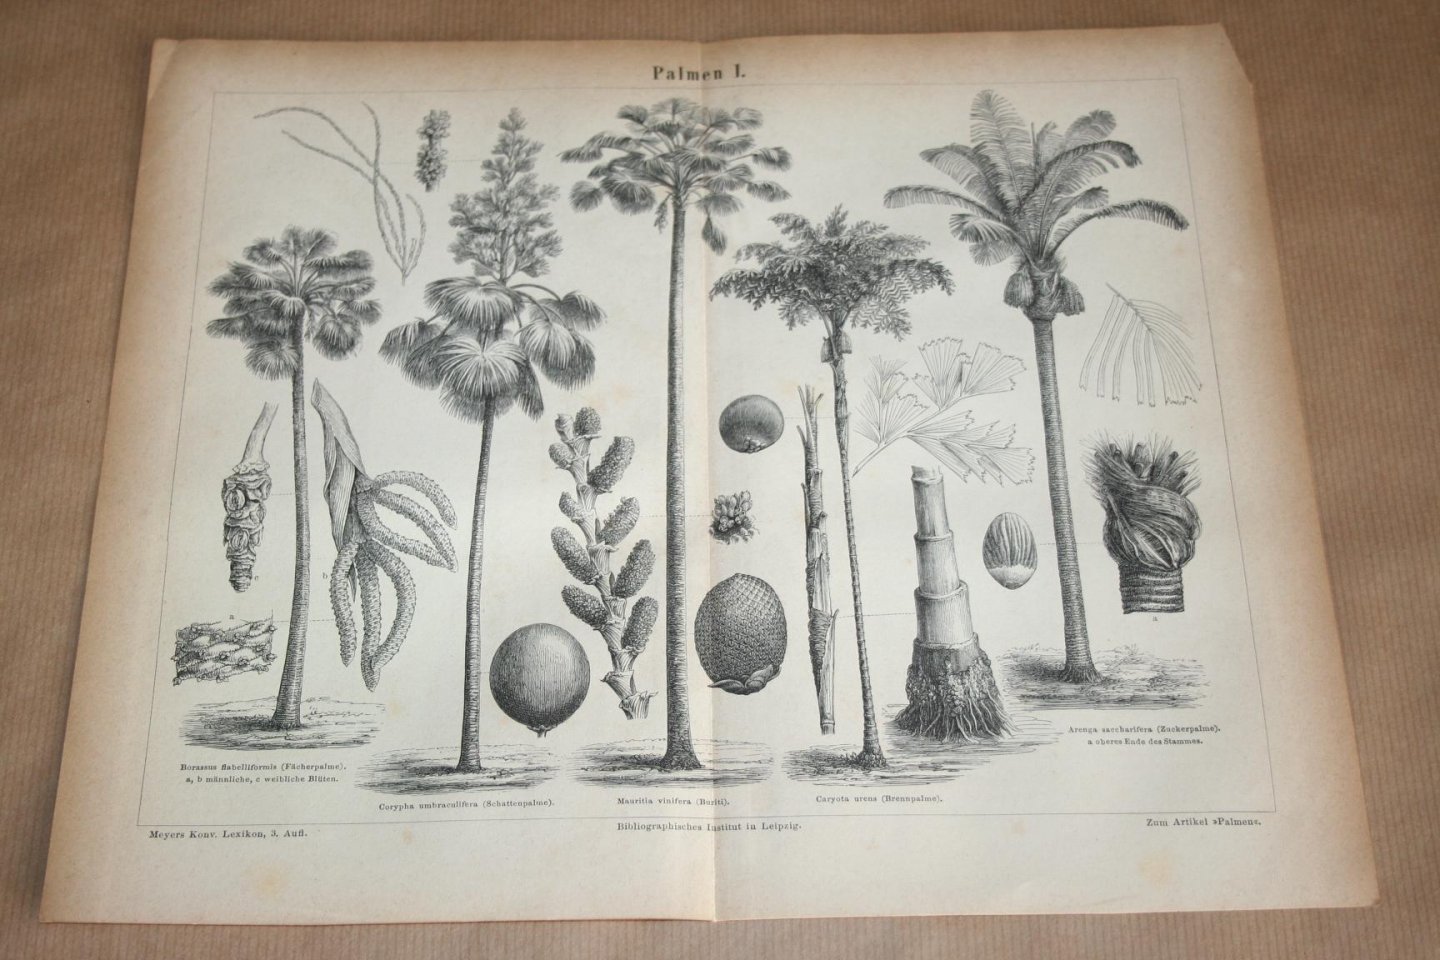  - 2 antieke prenten - Diverse soorten palmen  - Circa 1875